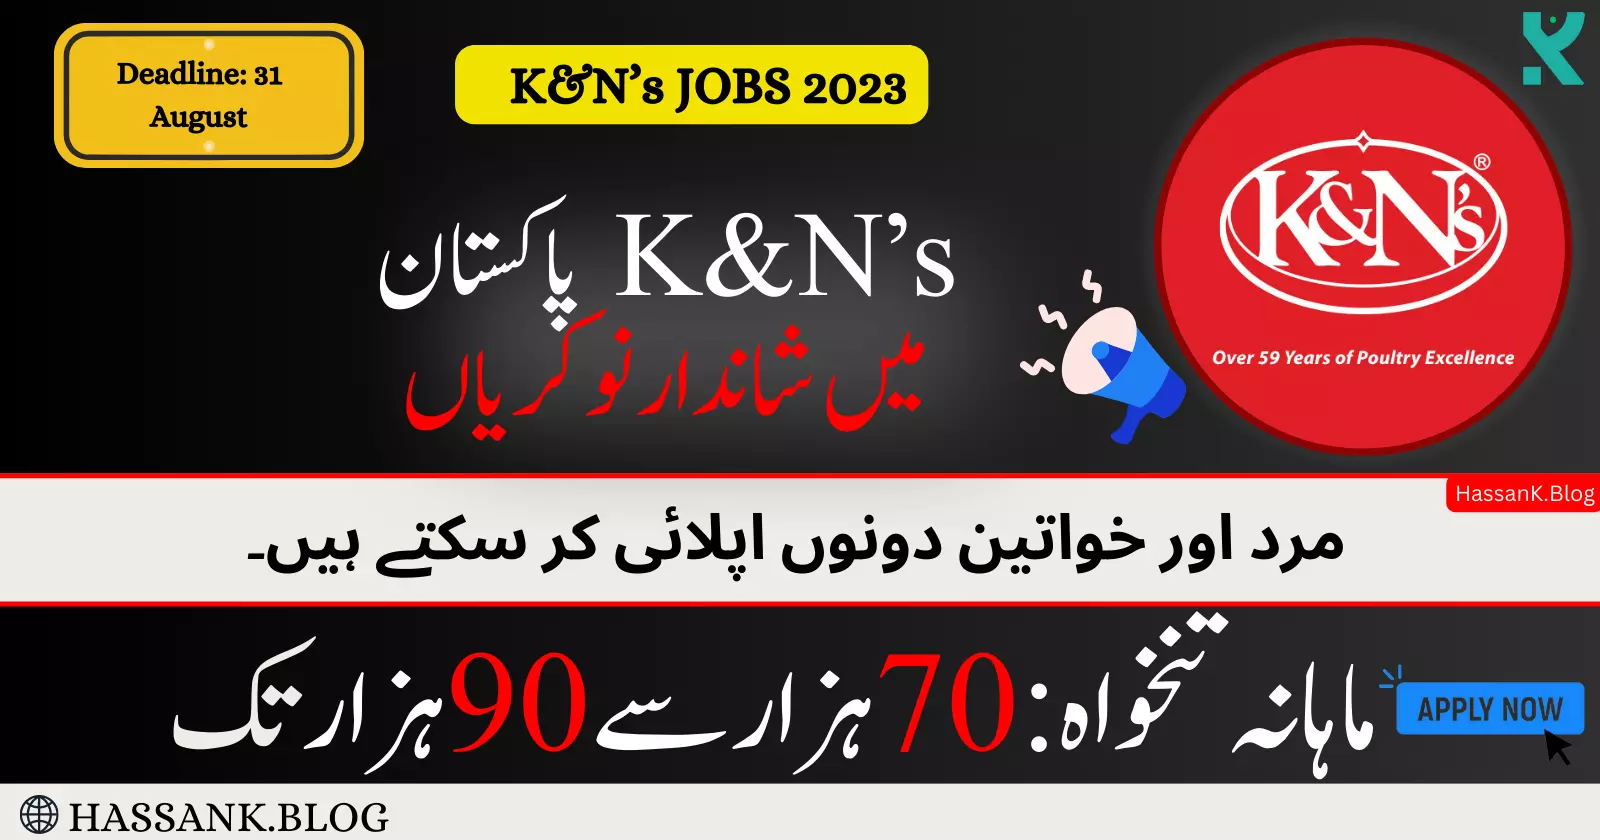 K&N’s Pakistan